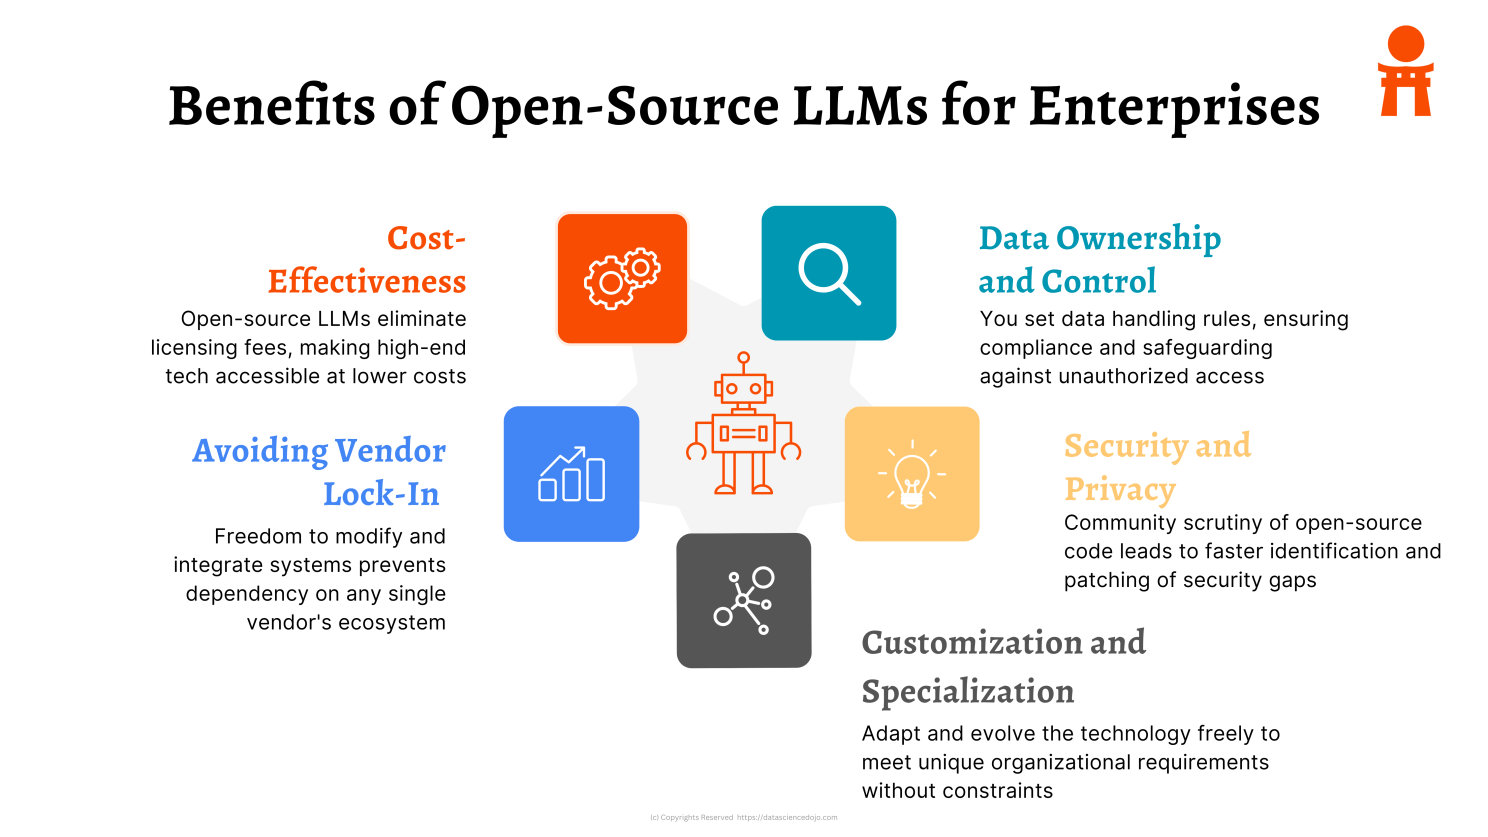 Benefits of Open-Source LLMs for enterprises